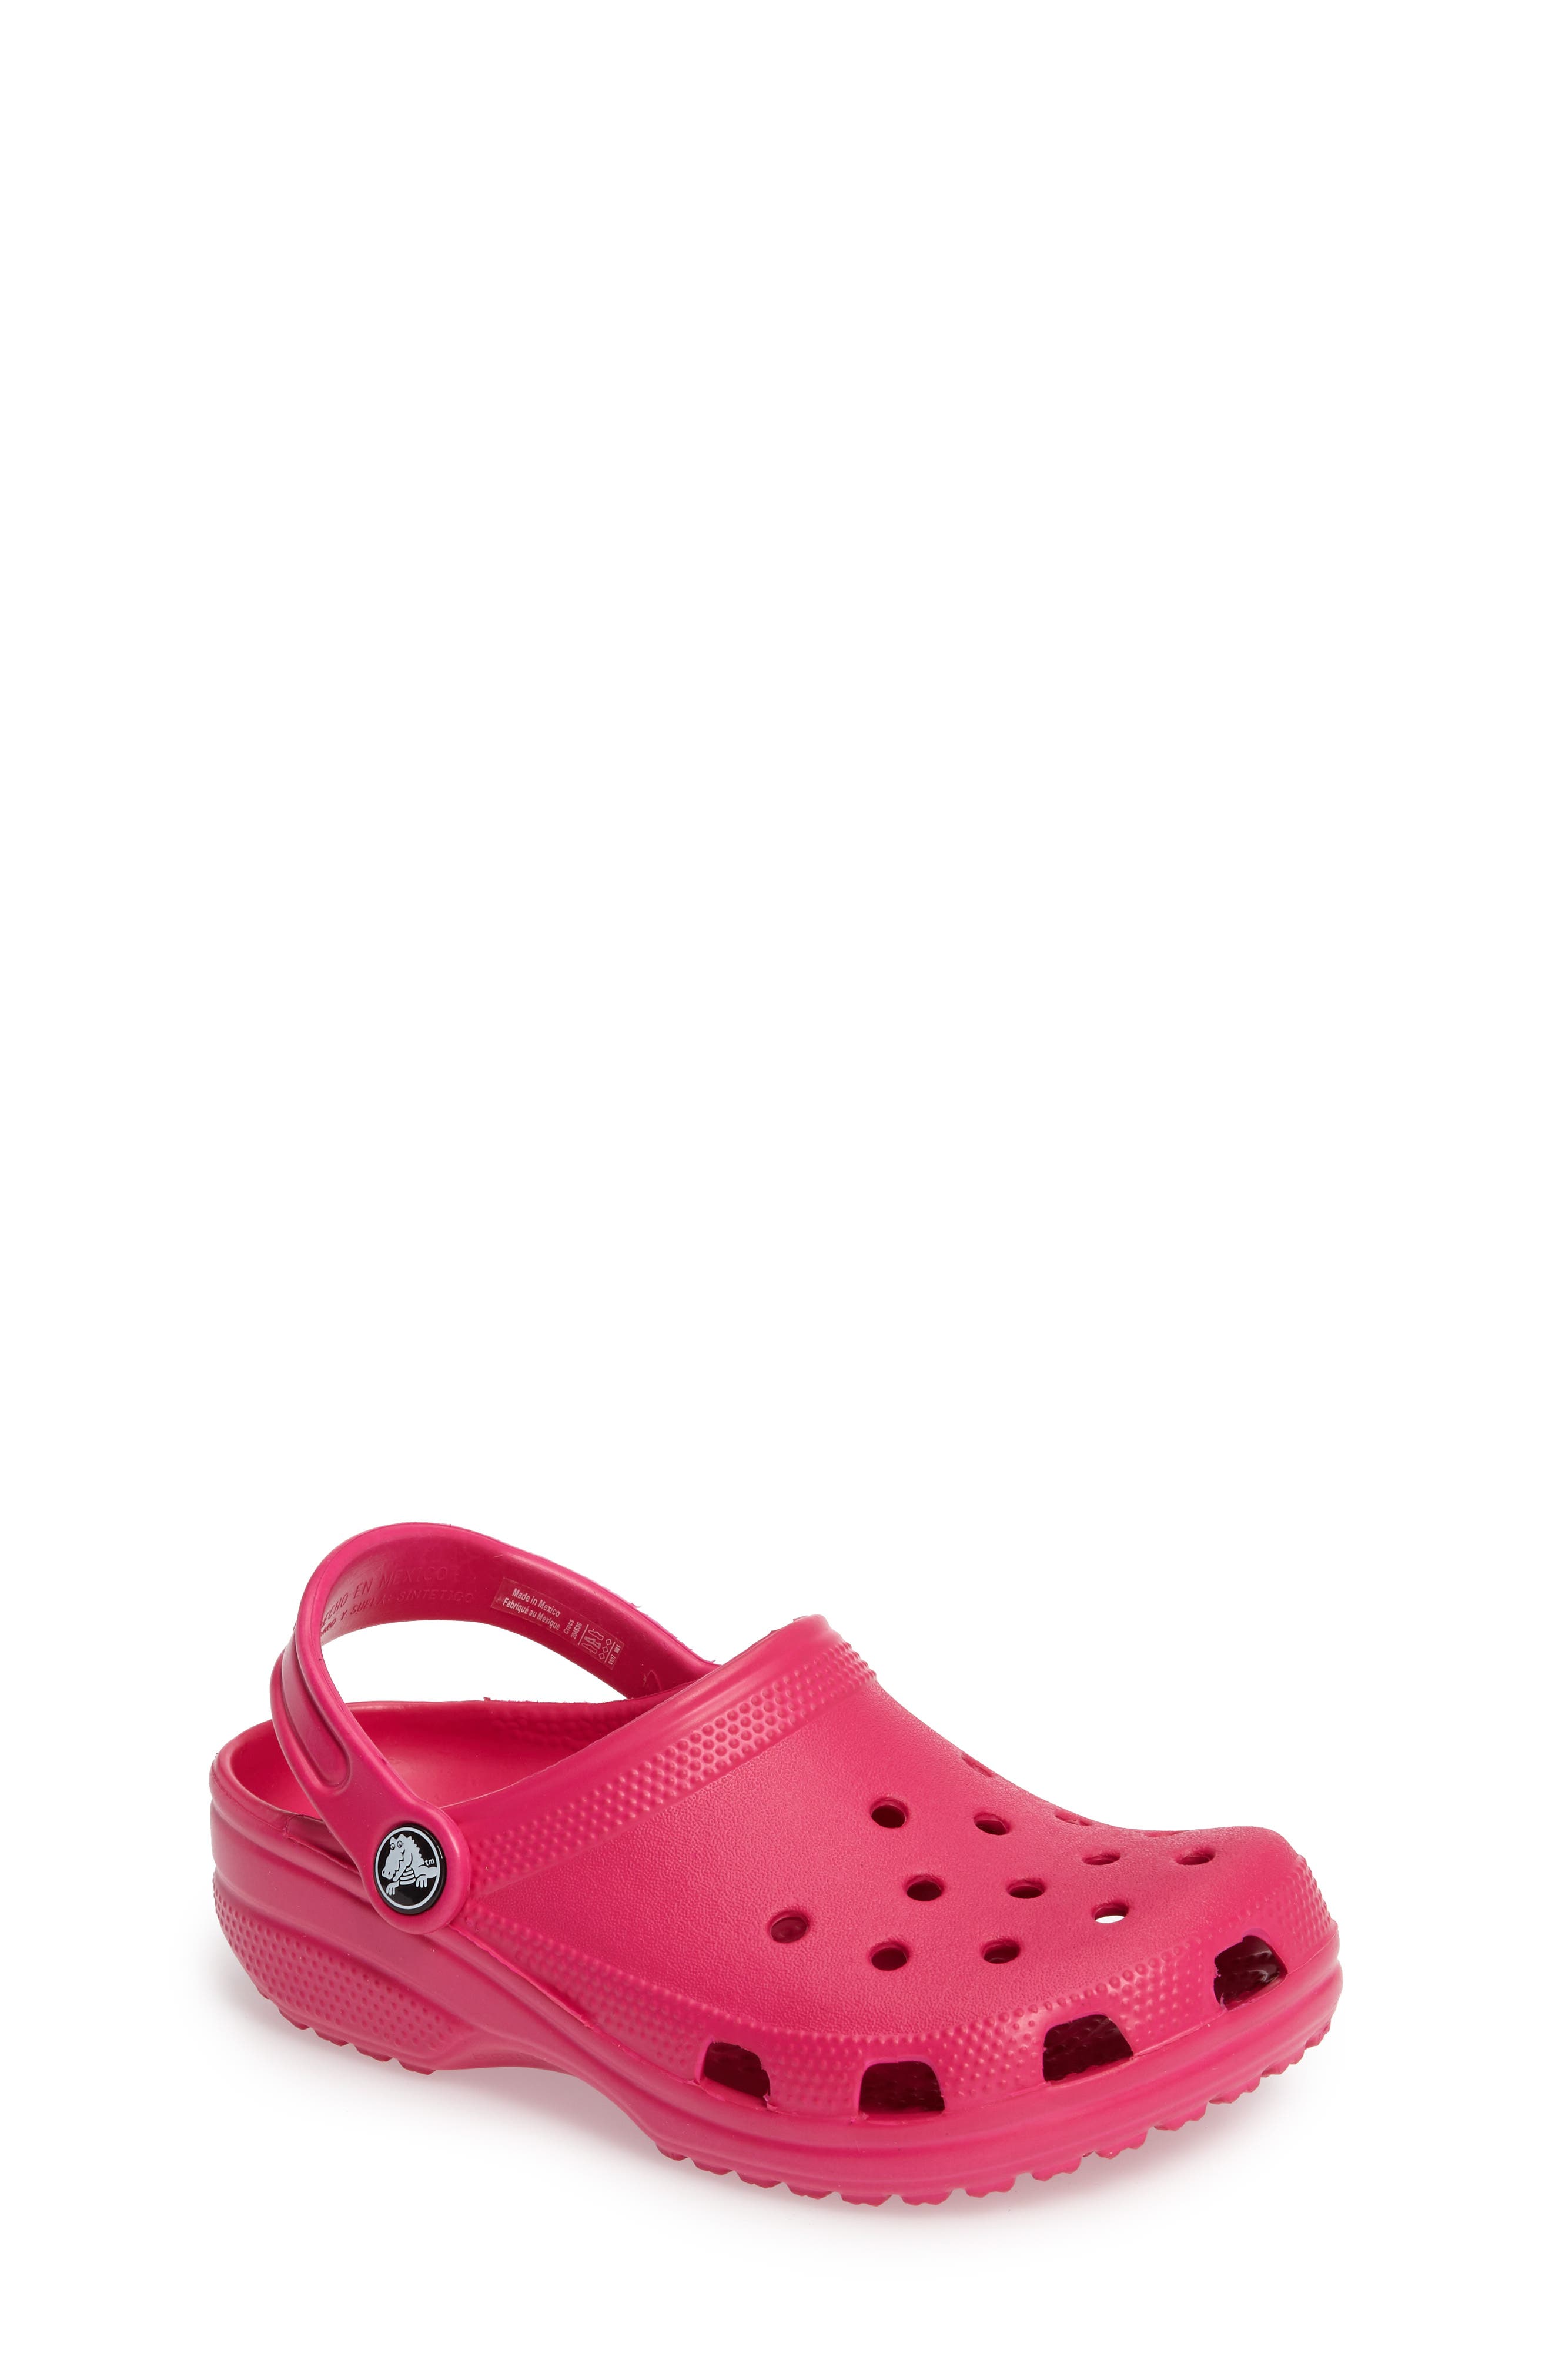 crocs shoes for babies